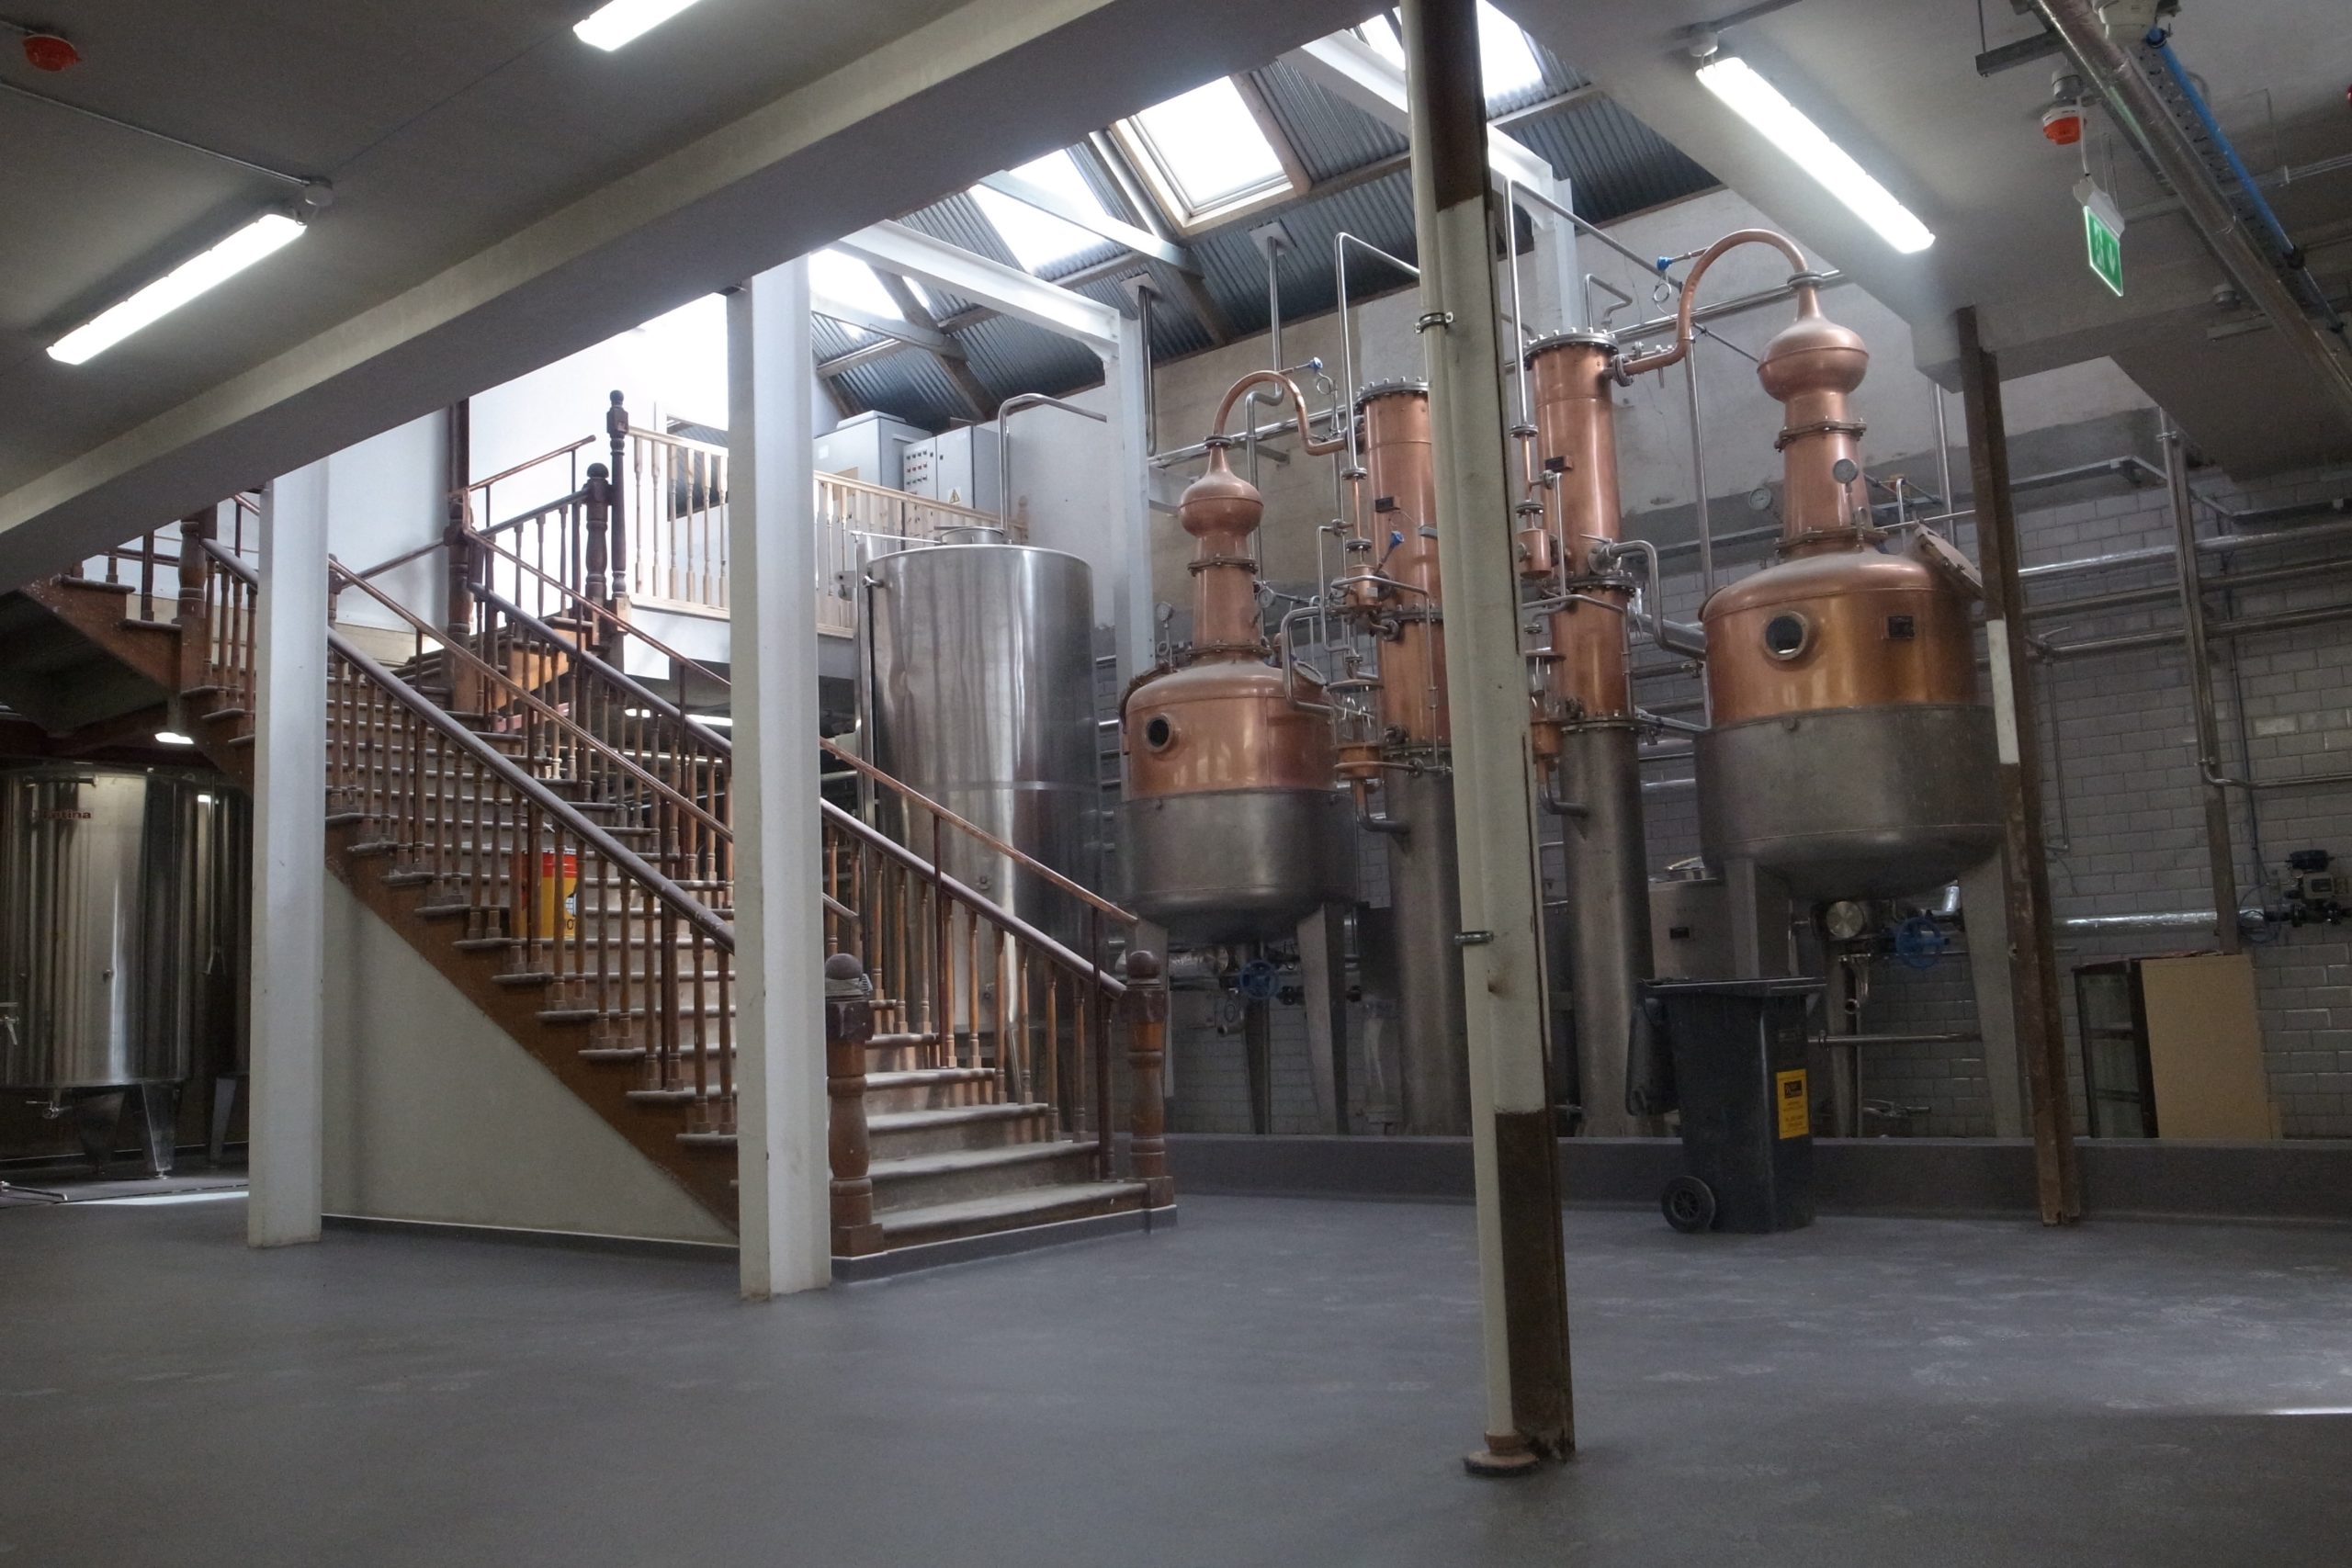 Blackwater Distillery